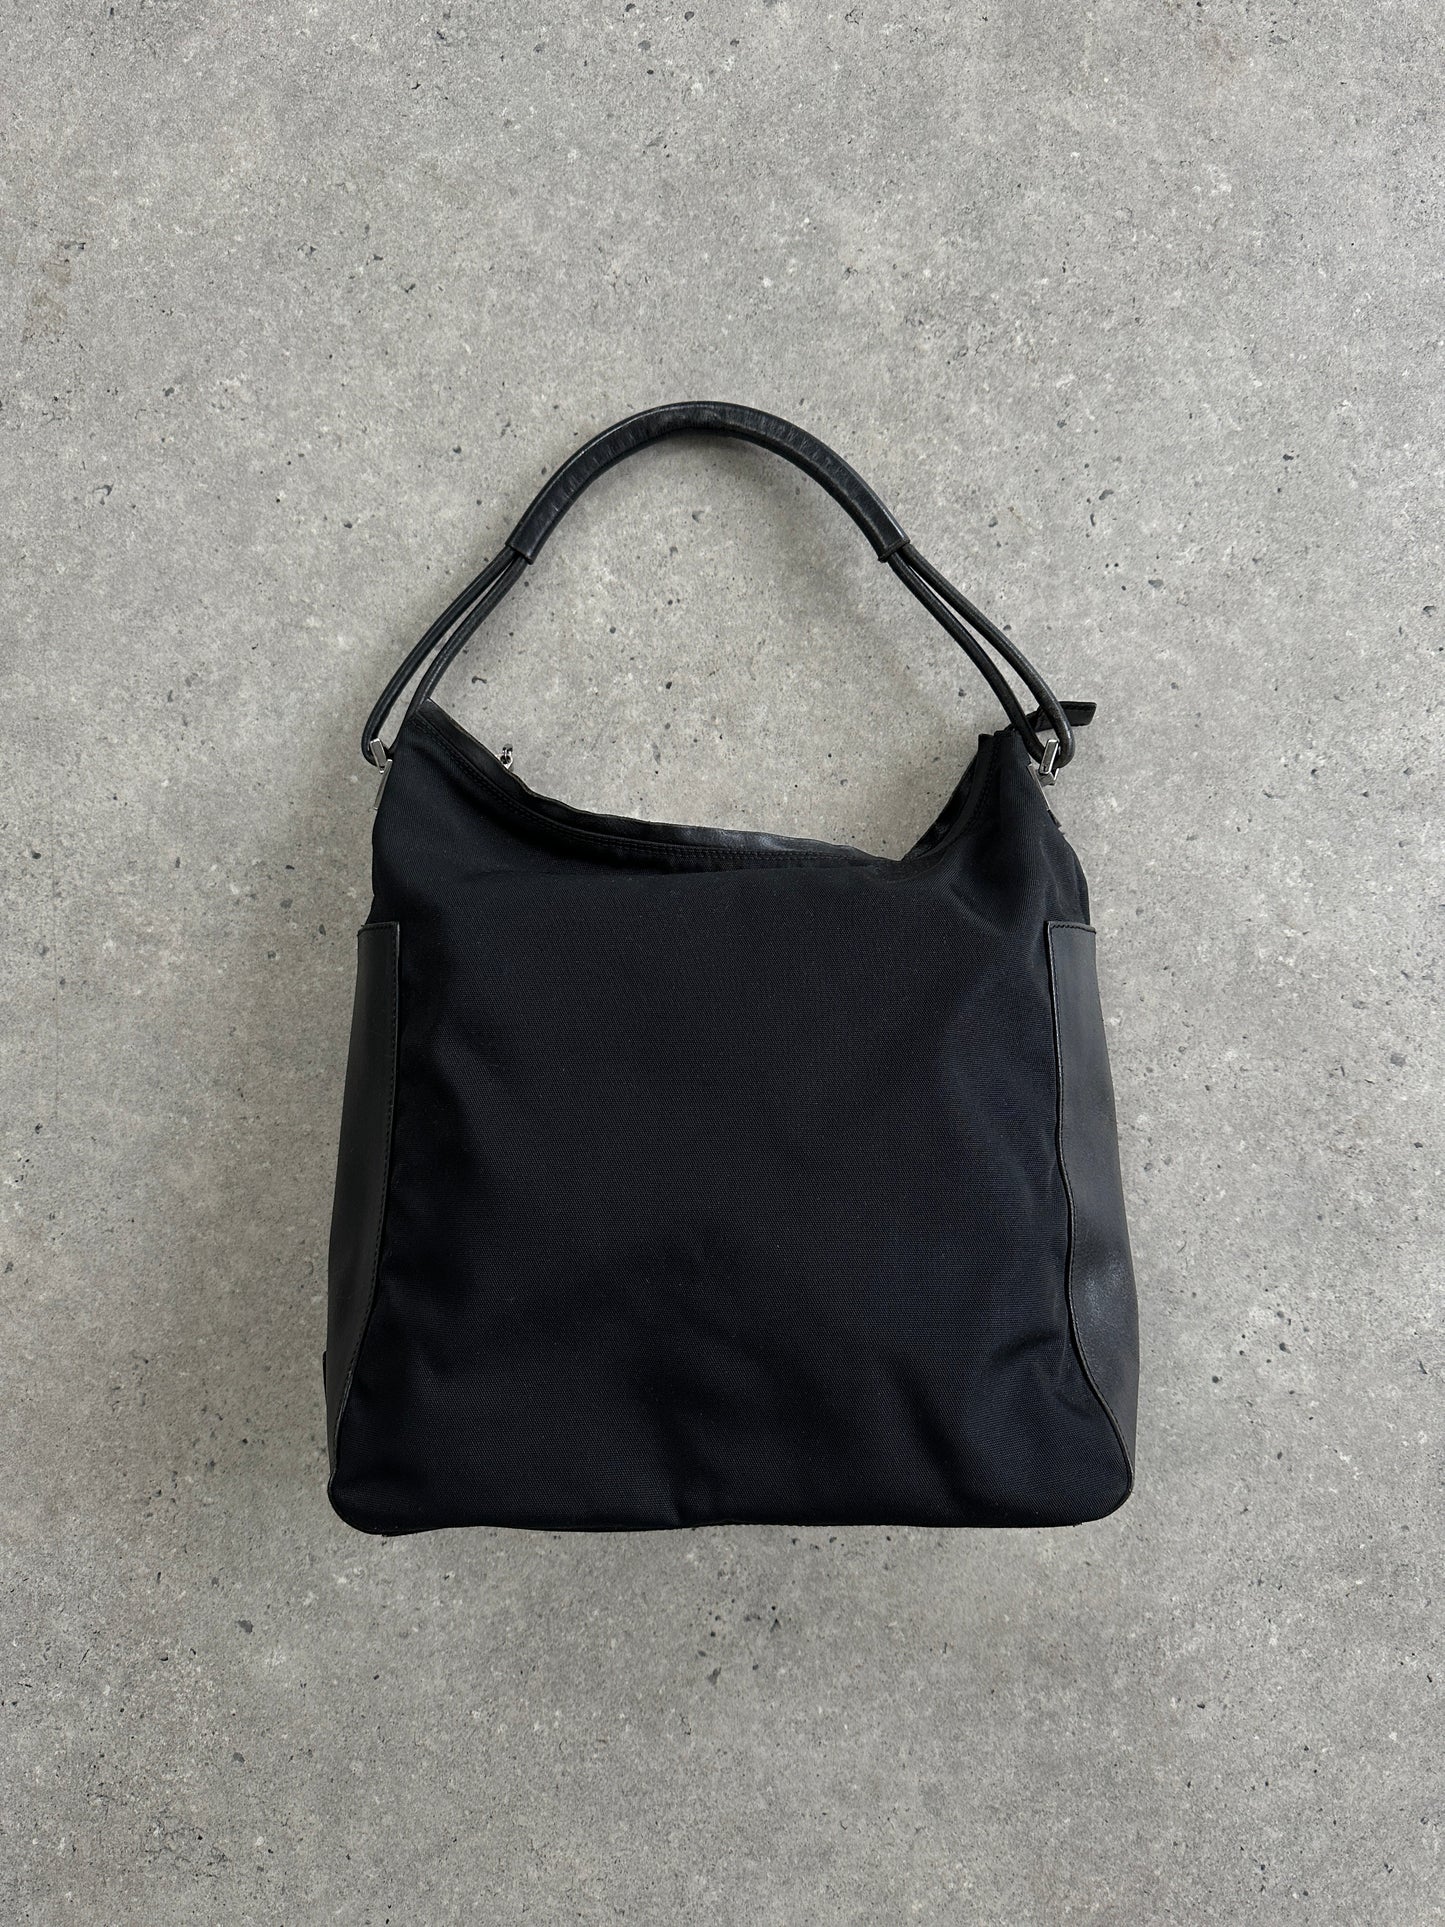 Gucci Canvas Leather Shoulder Bag